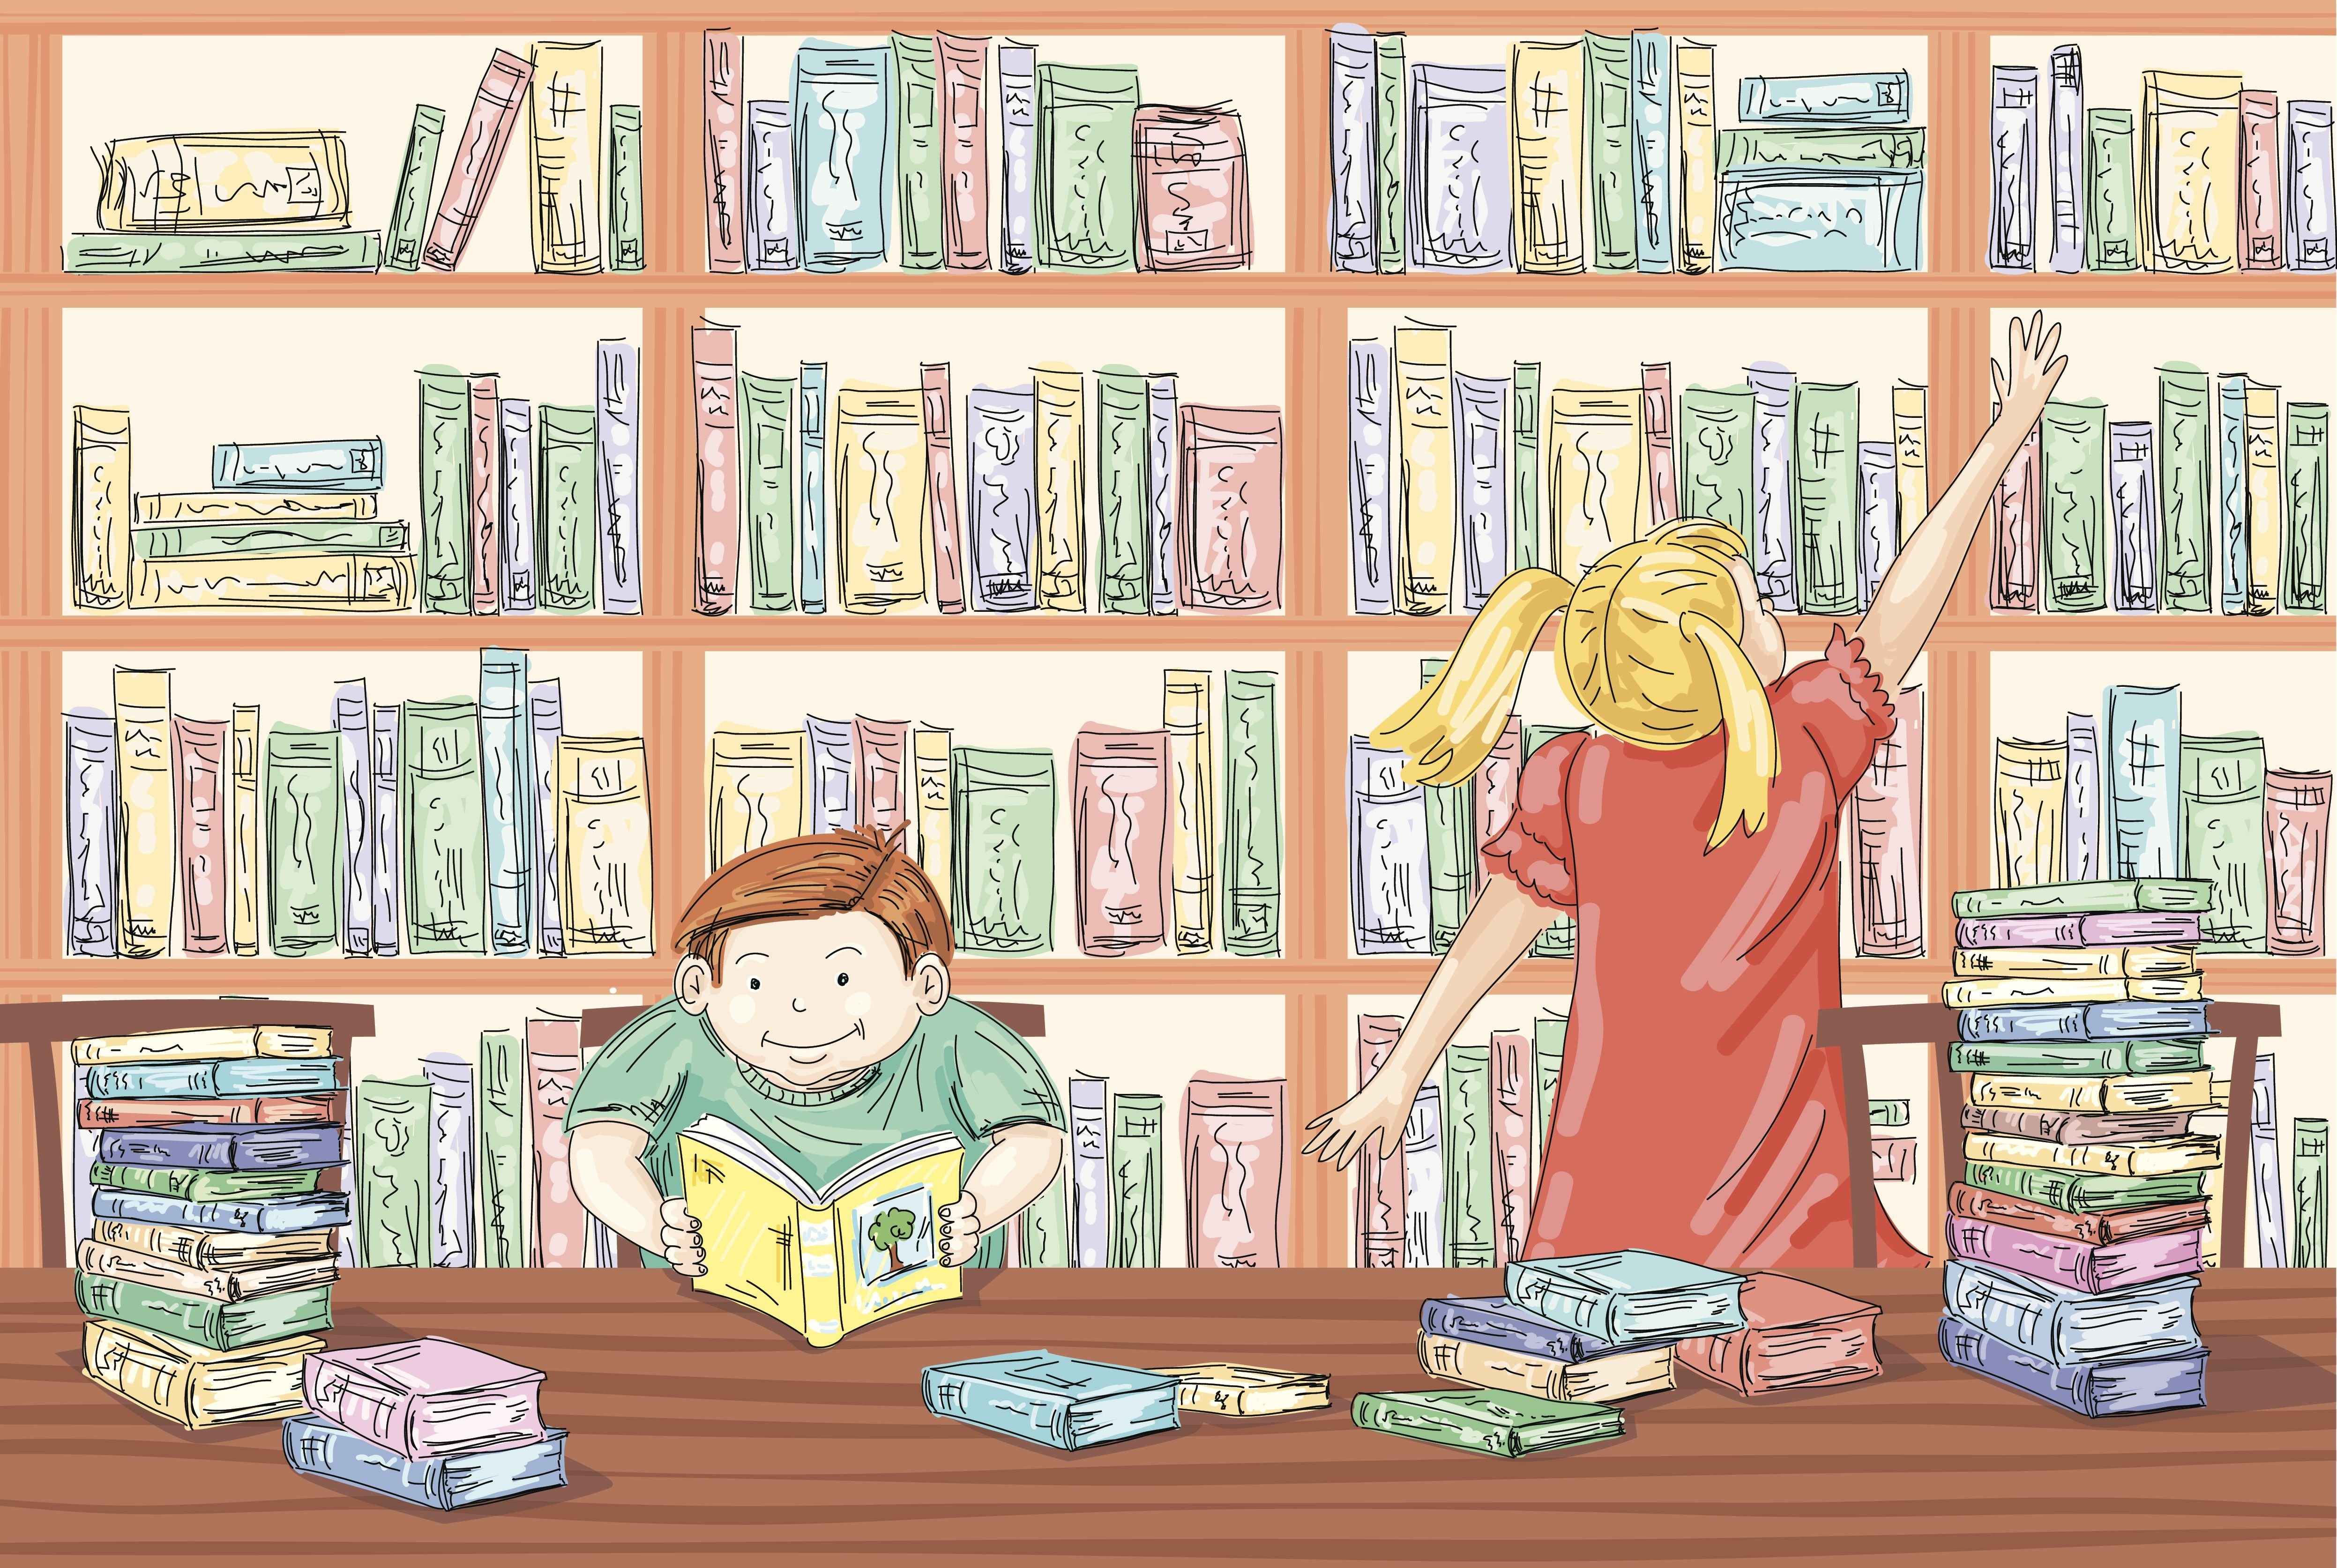 Библиотека в жизни ребенка